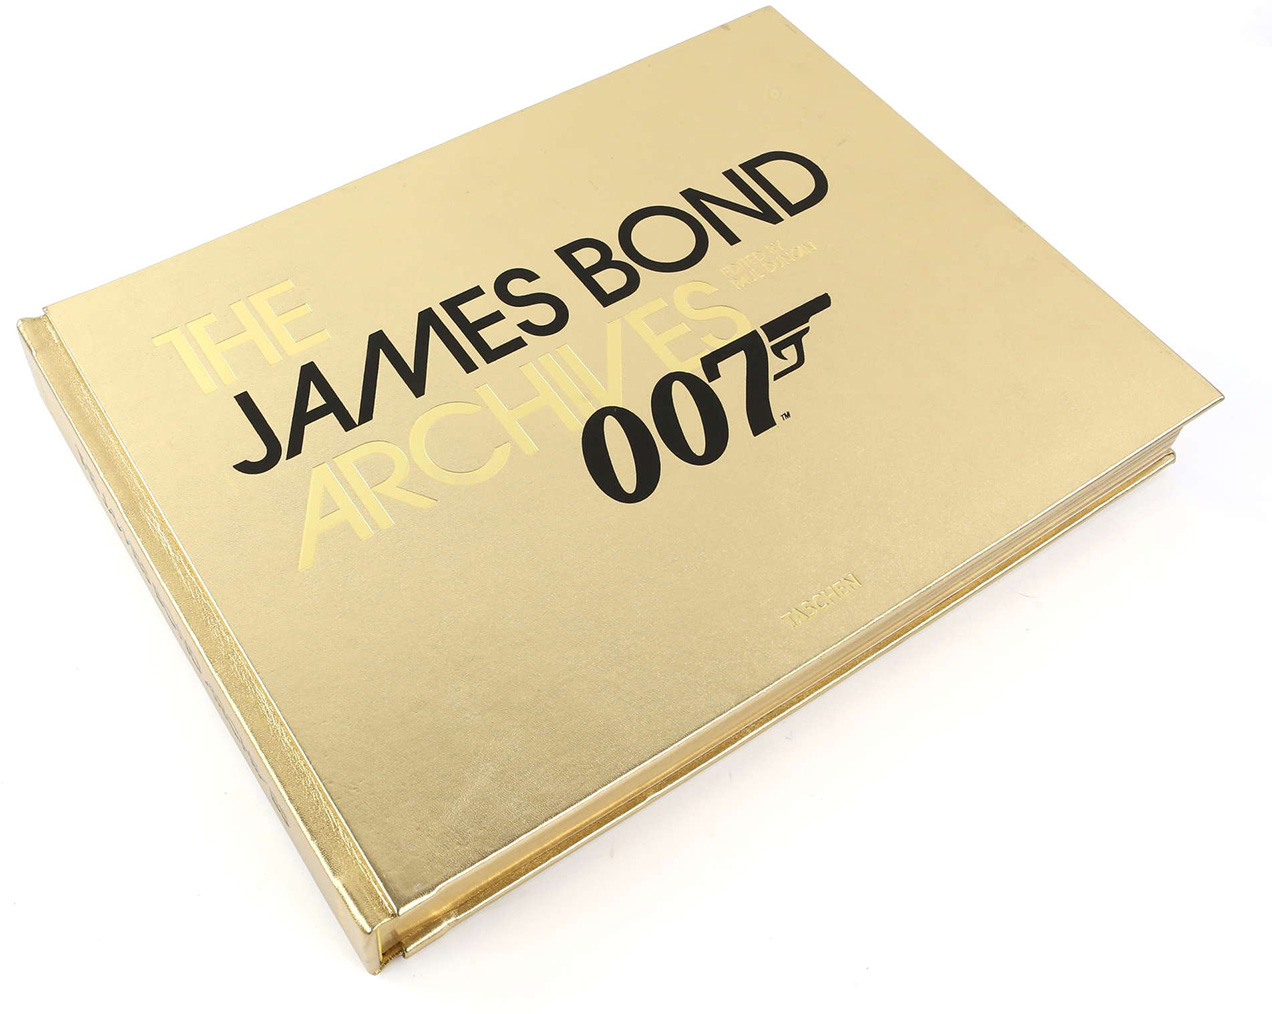 james bond archives gold limited edition auction